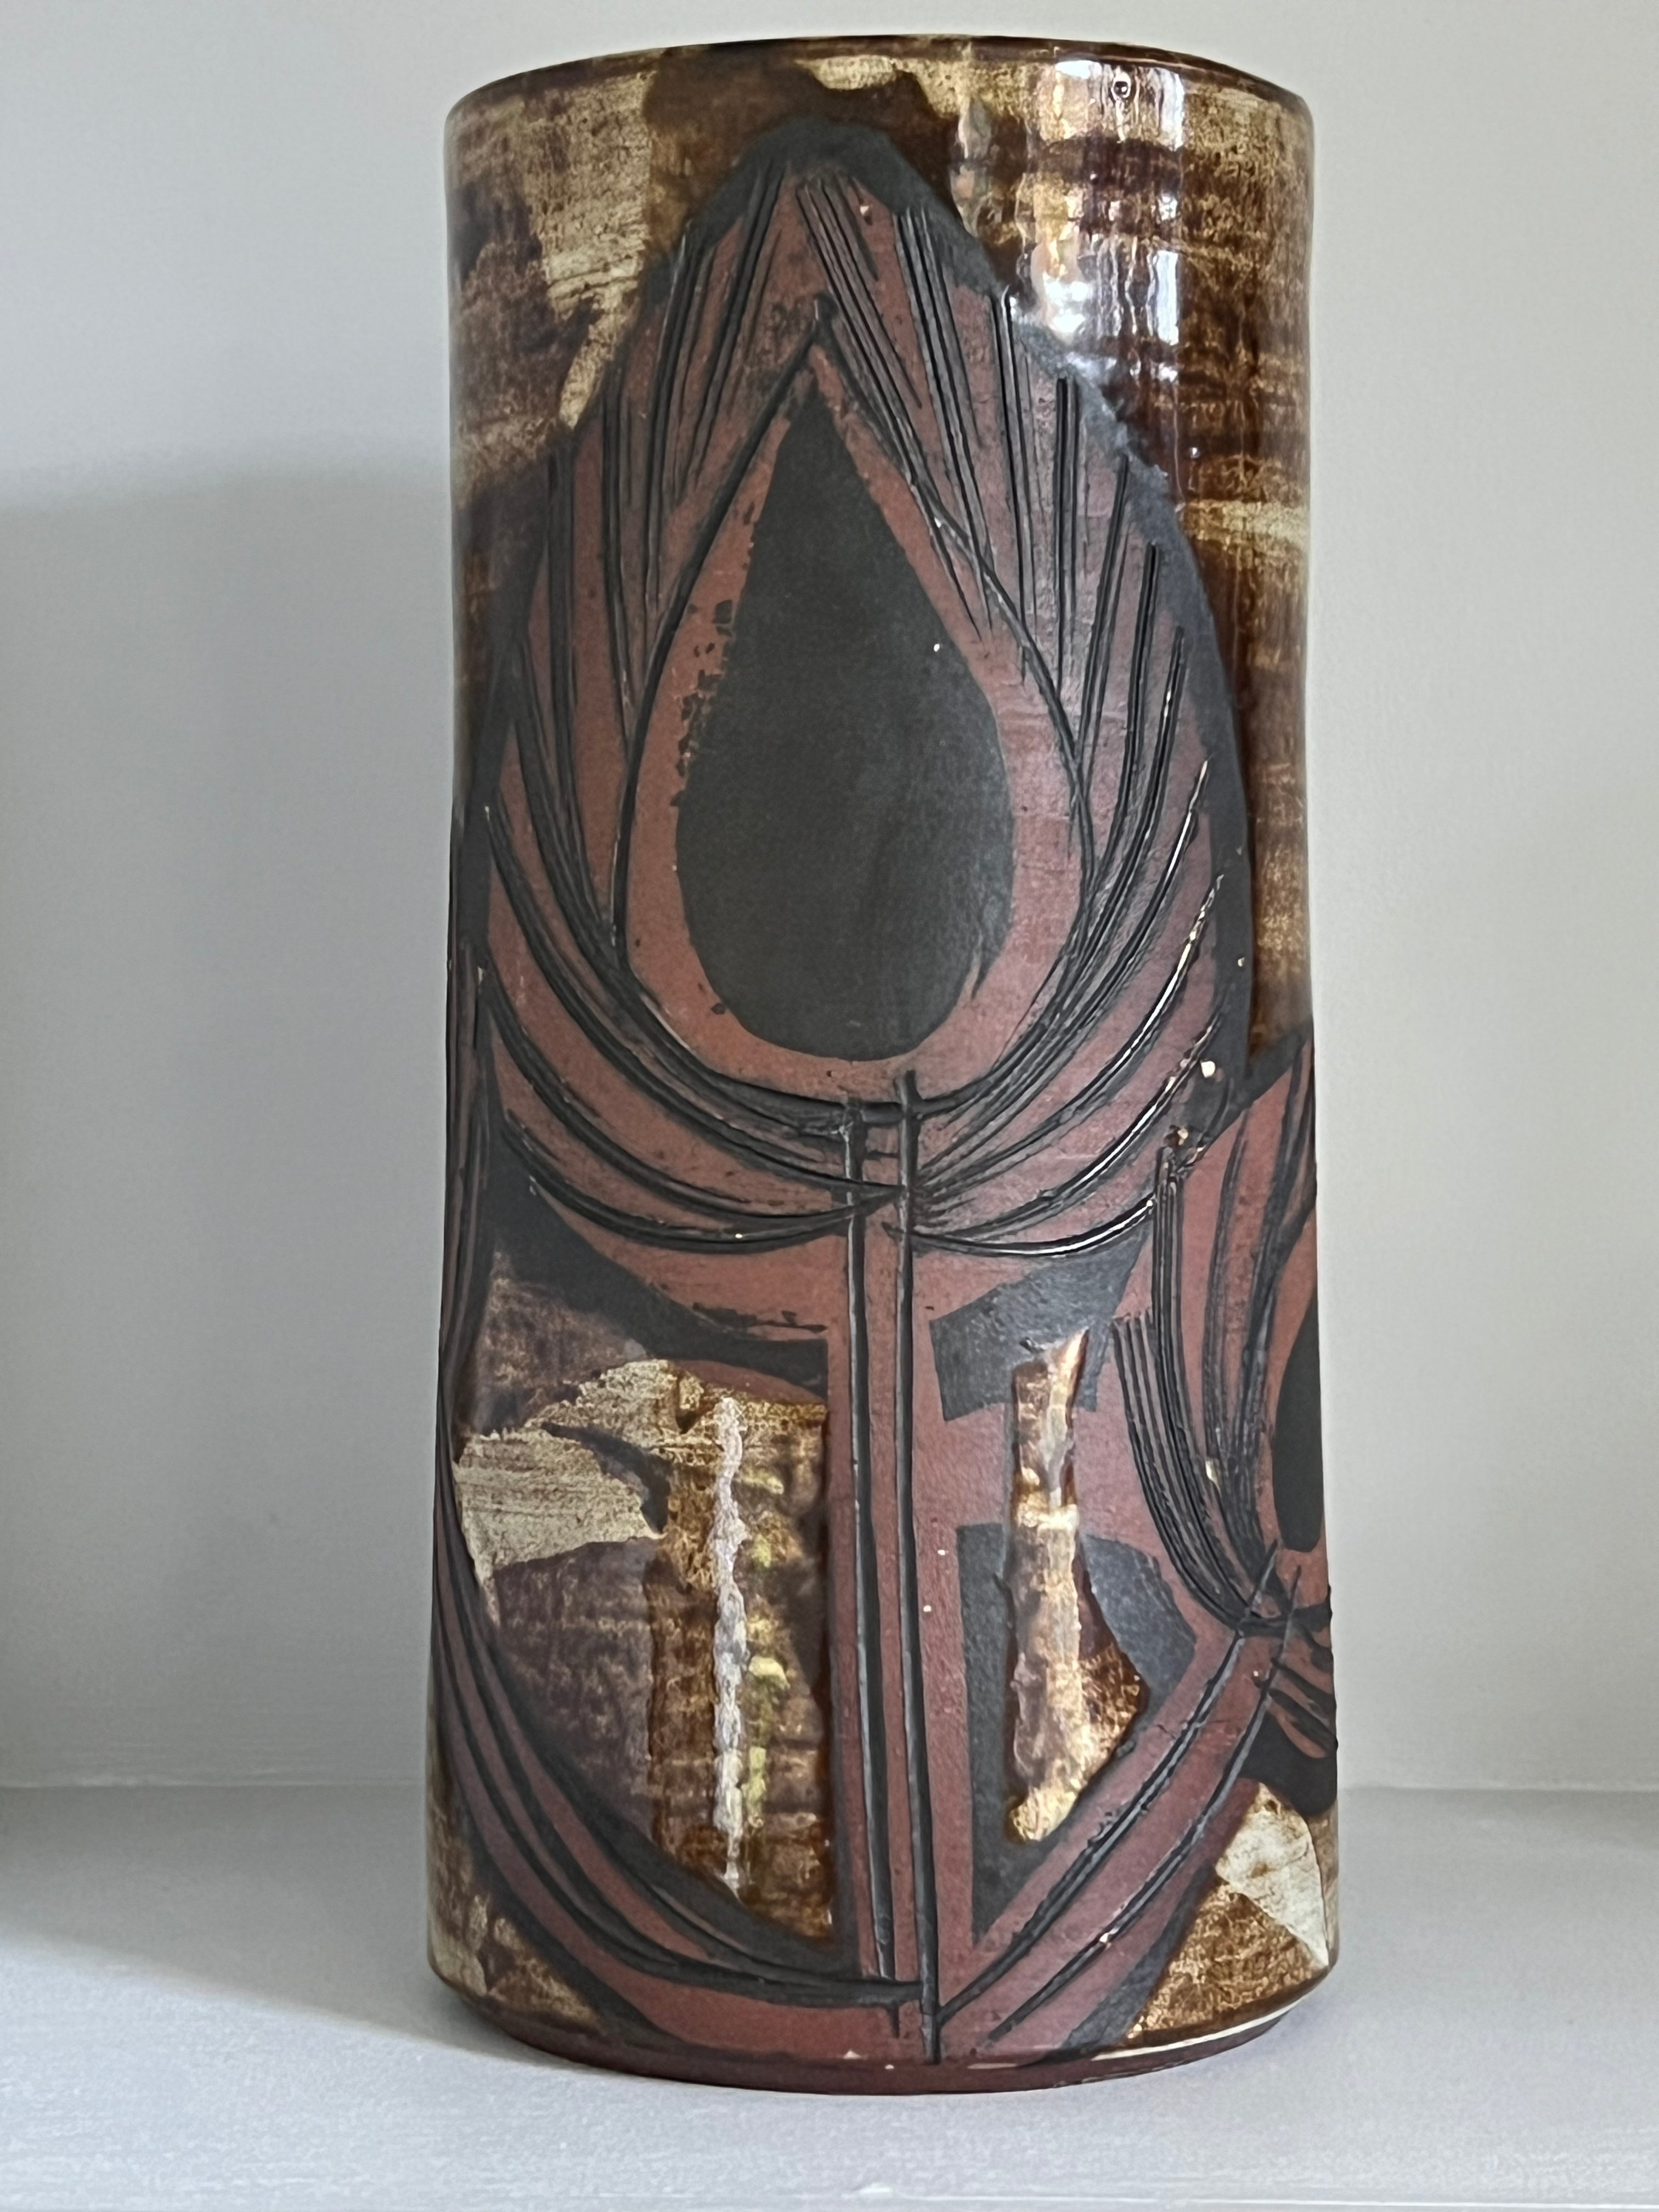 Vintage Swedish Ceramic Vase Glazed and Matt combination